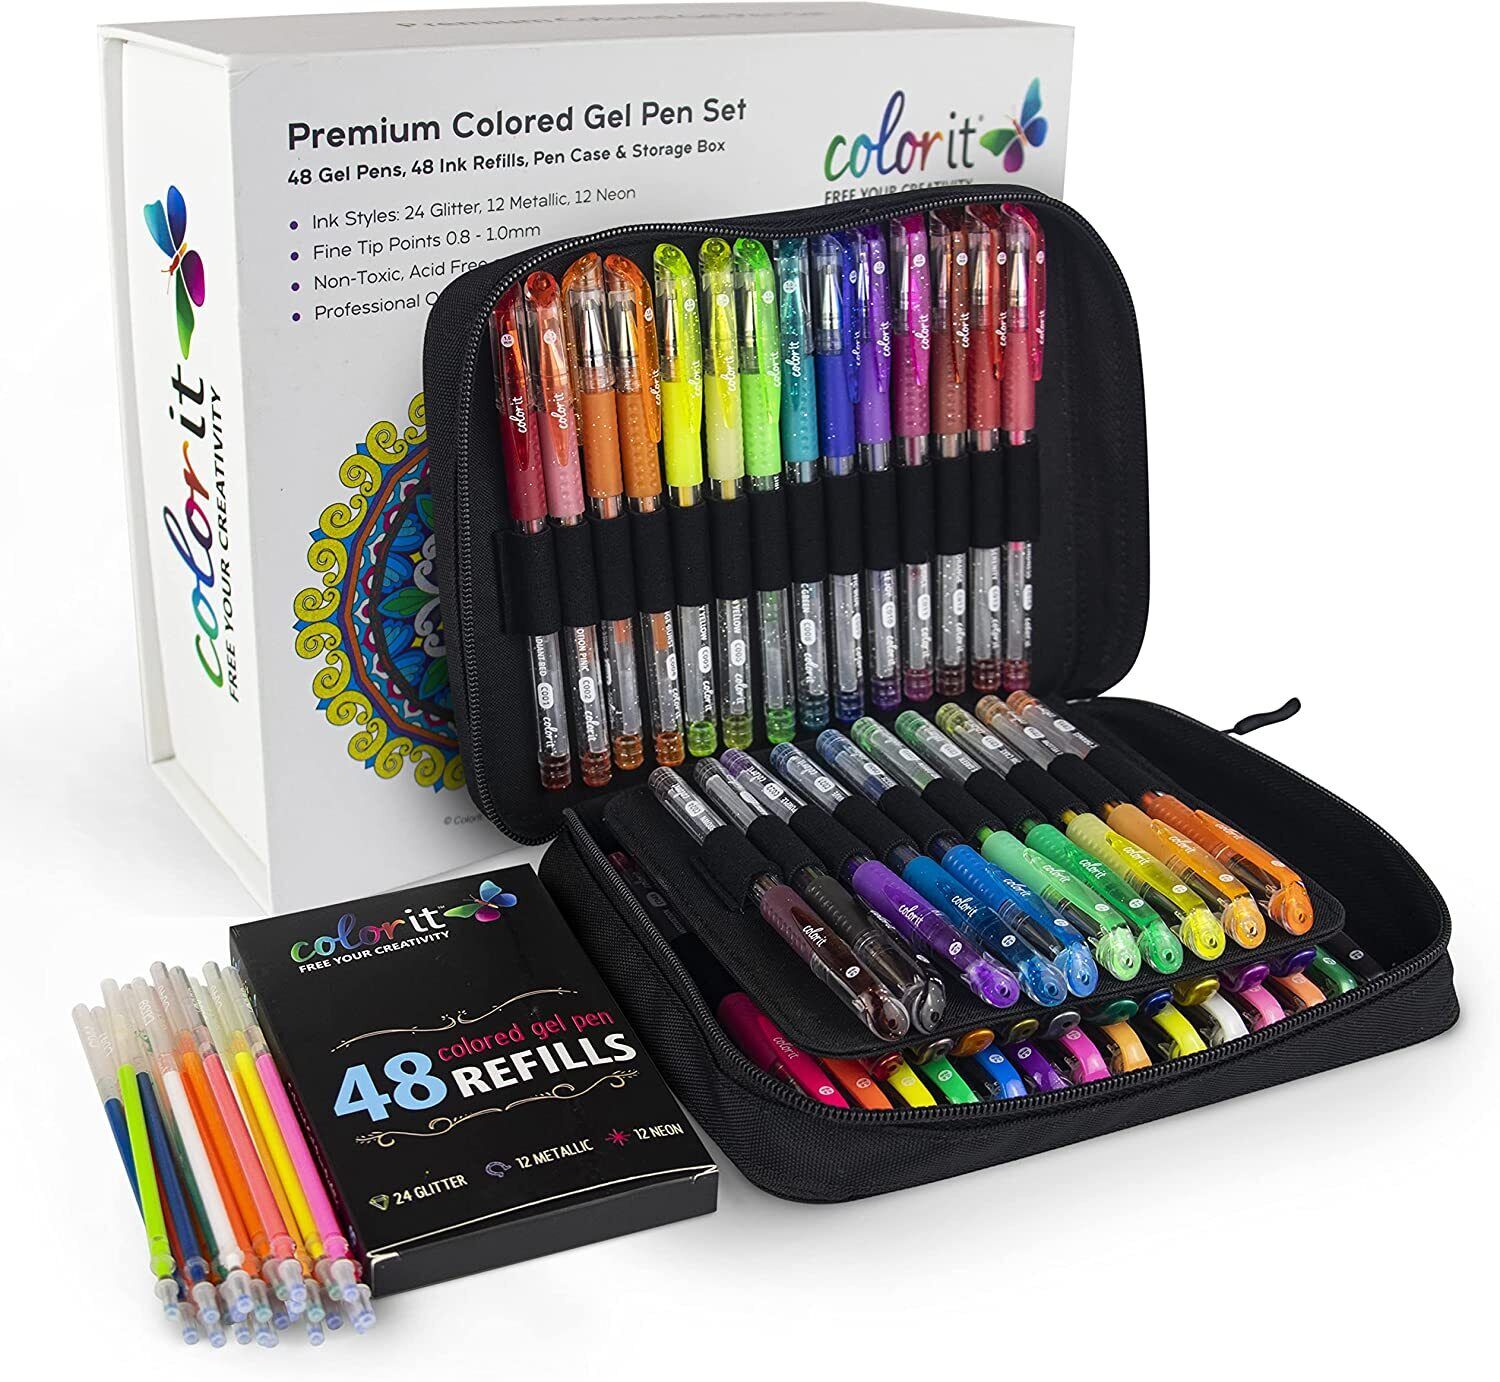 ColorIt Glitter Gel Pens For Adult Coloring Books 96 Piece Set - Multicolor